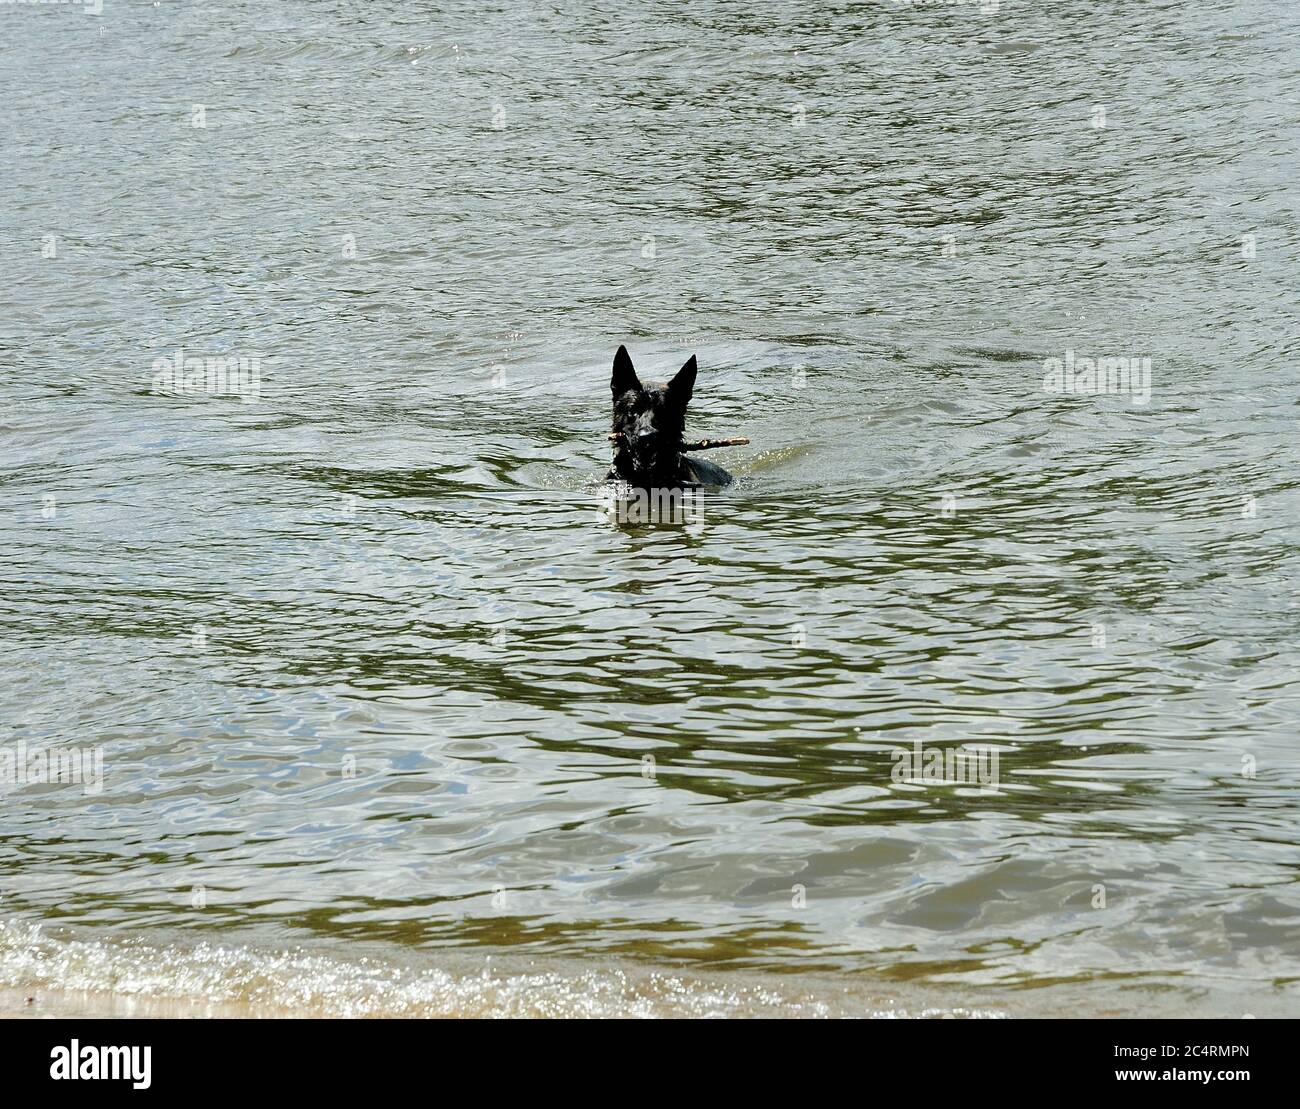 German Shepard dog playing in water. Stock Photo